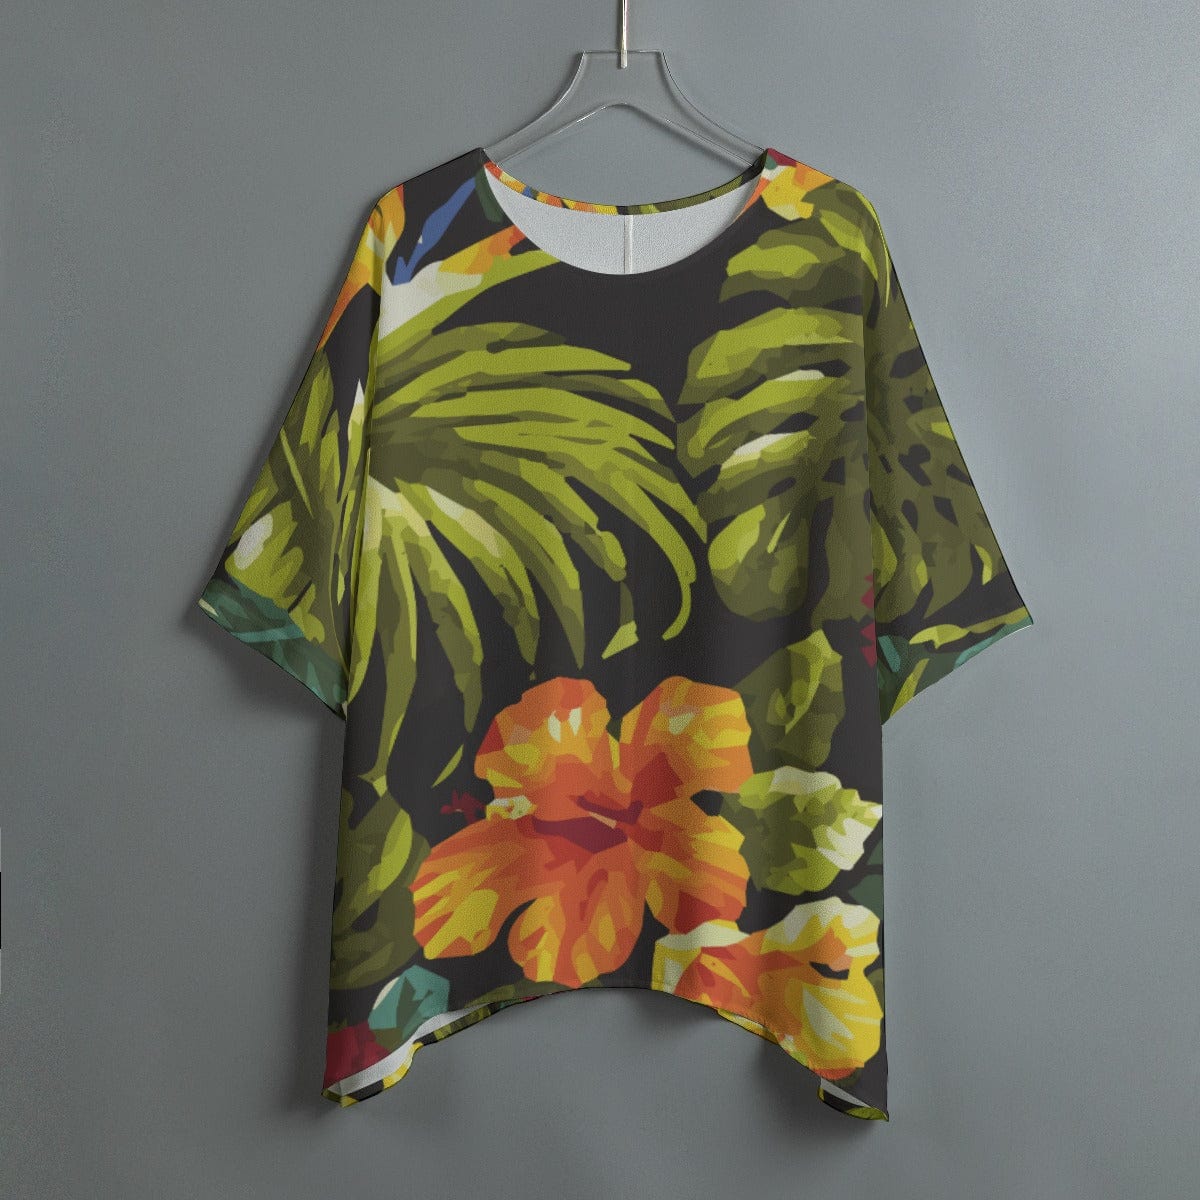 Yoycol Top Jungle Women's Bat Sleeve Shirt